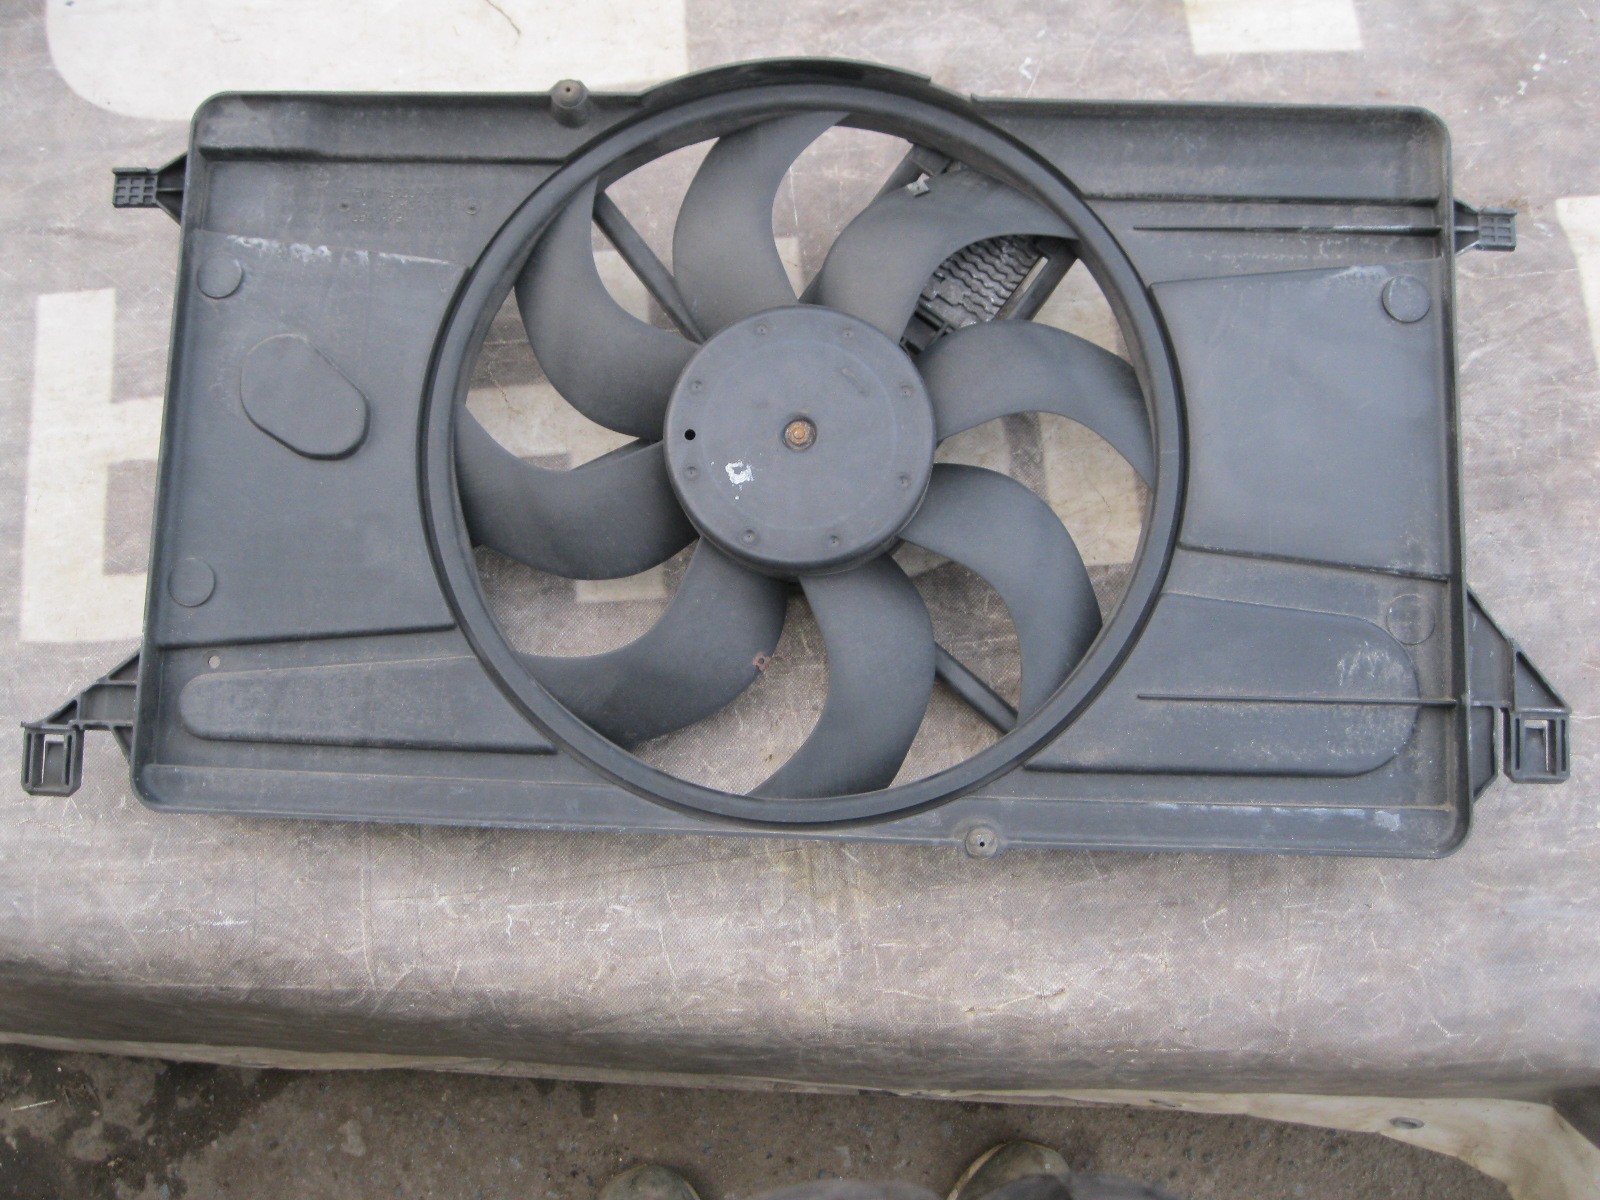 Вентилятор охлаждения радиатора фокус 2. Вентилятор охлаждения Ford Focus 2. Вентилятор охлаждения Форд фокус 2. Форд фокус 2 2007 год вентилятор охлаждения.